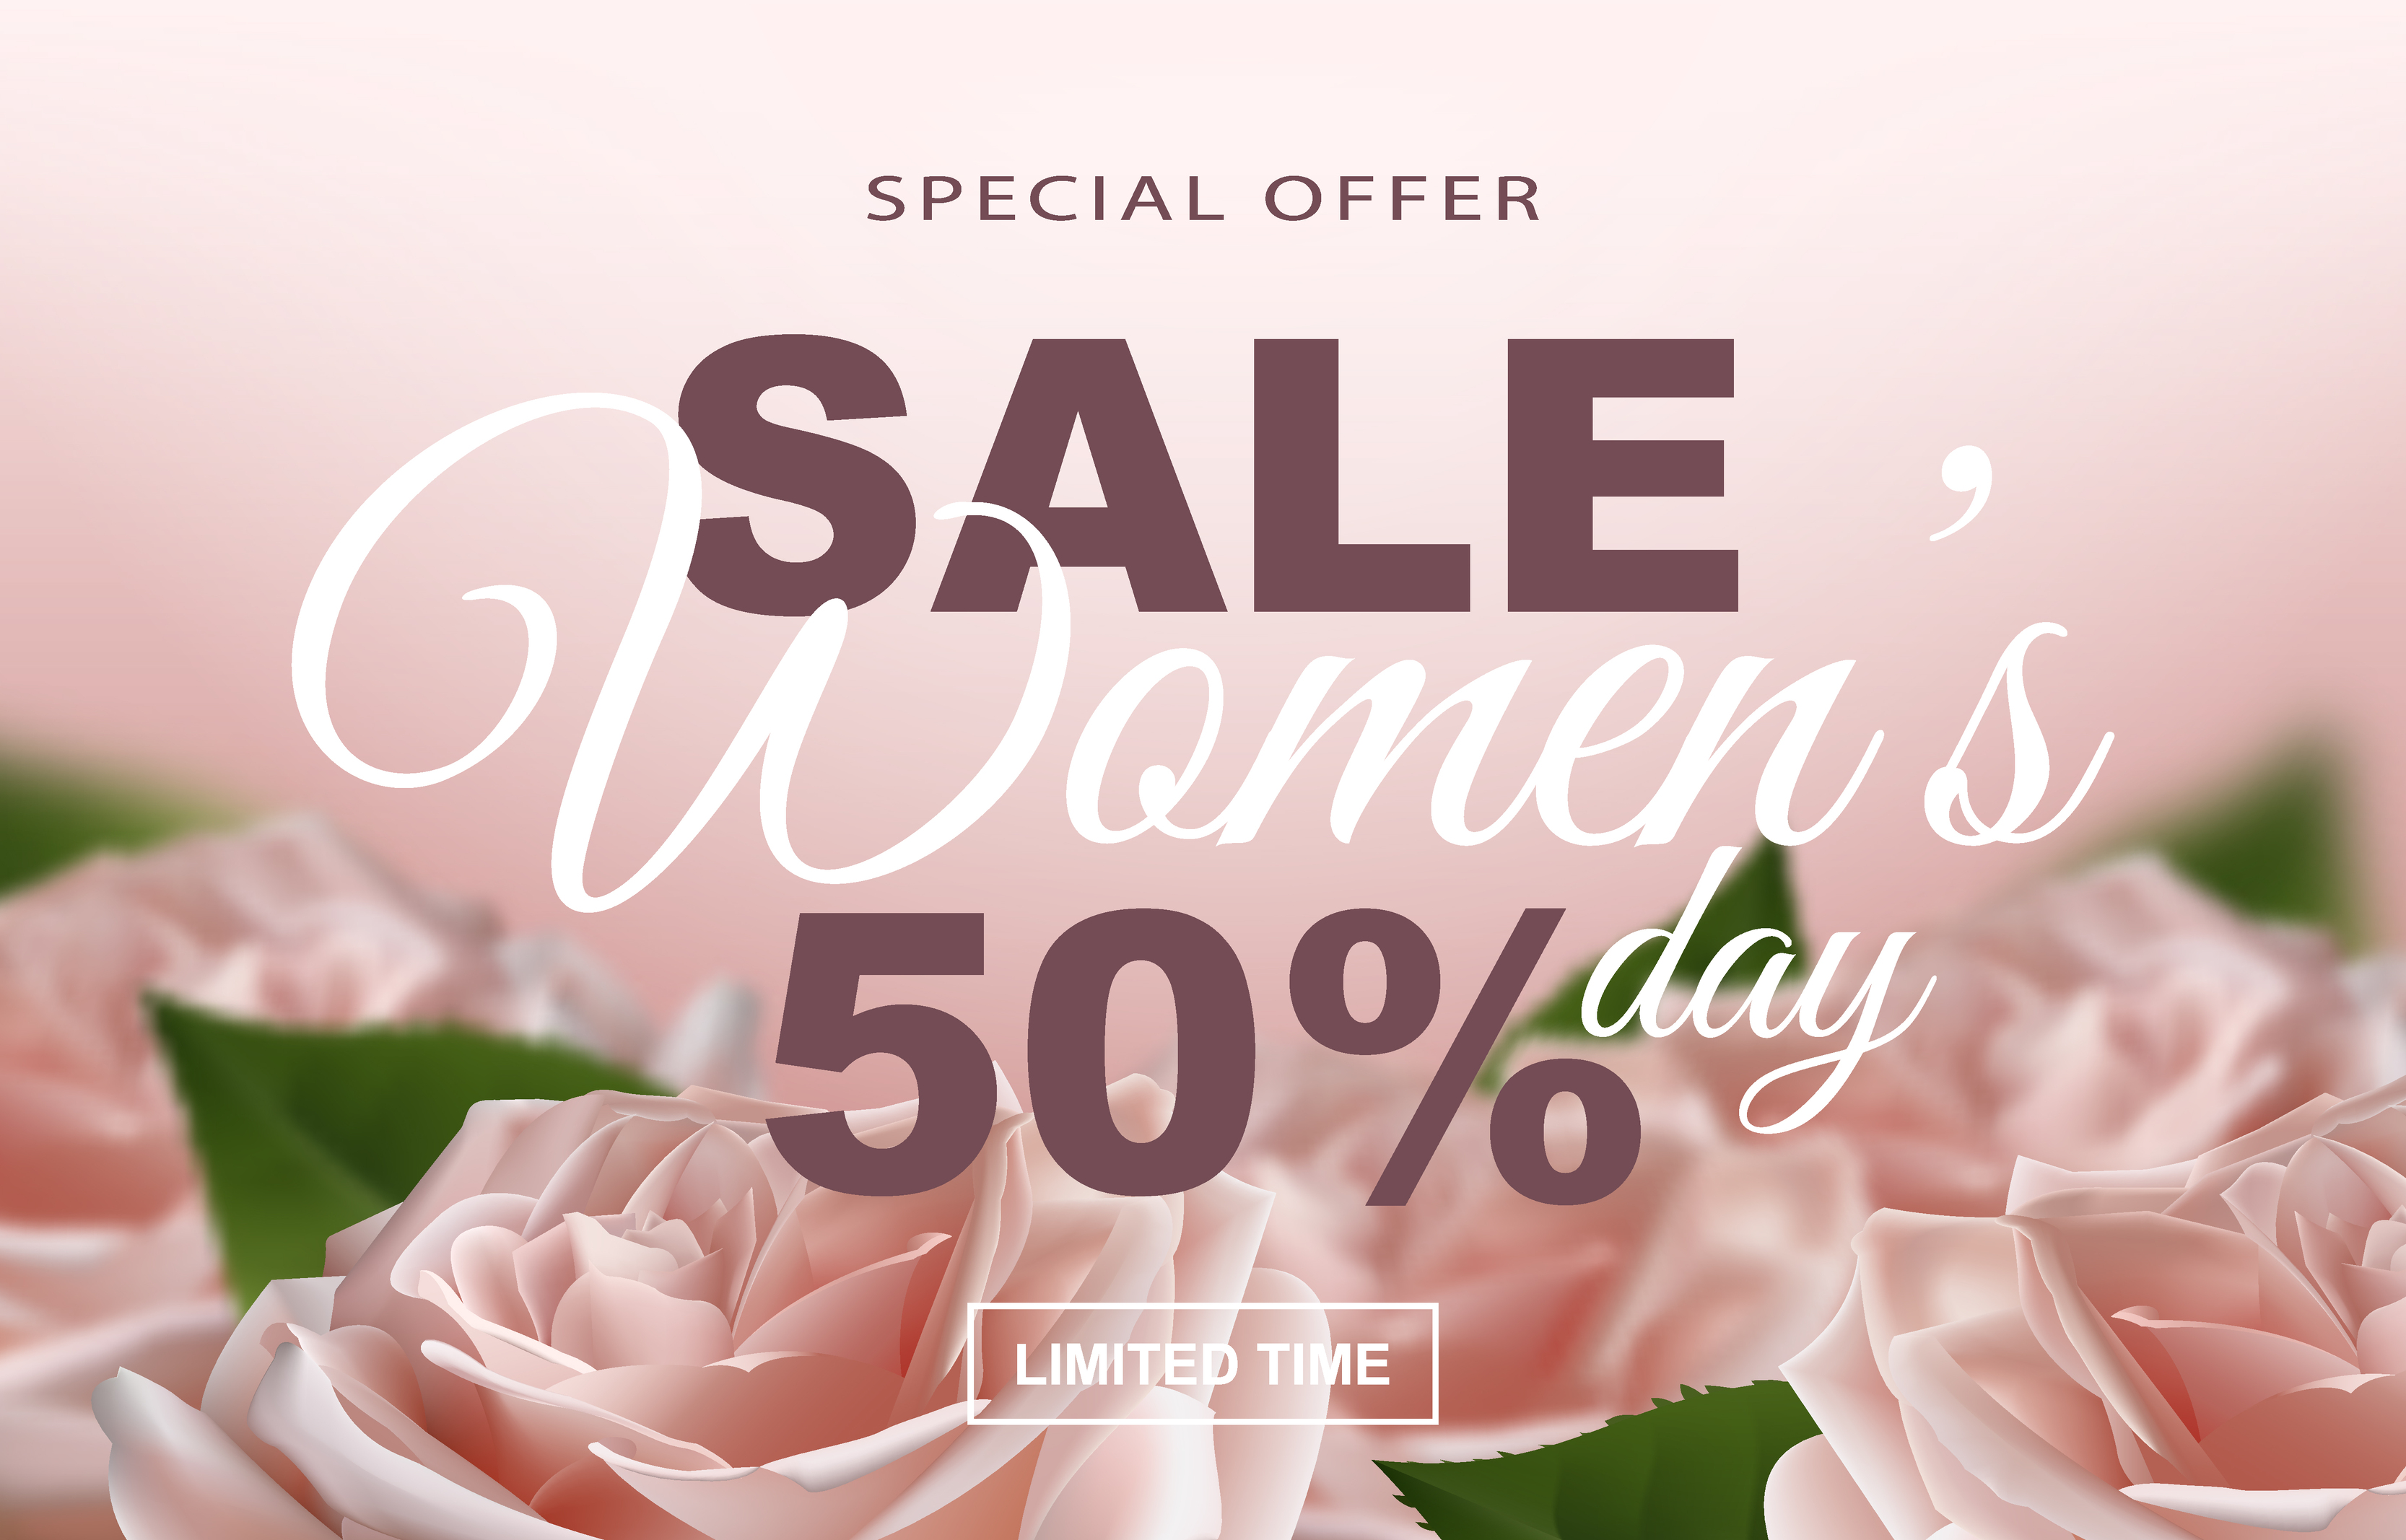 Sale Web Header or Banner for Women S Day. Stock Illustration -  Illustration of advertisement, gift: 66067676